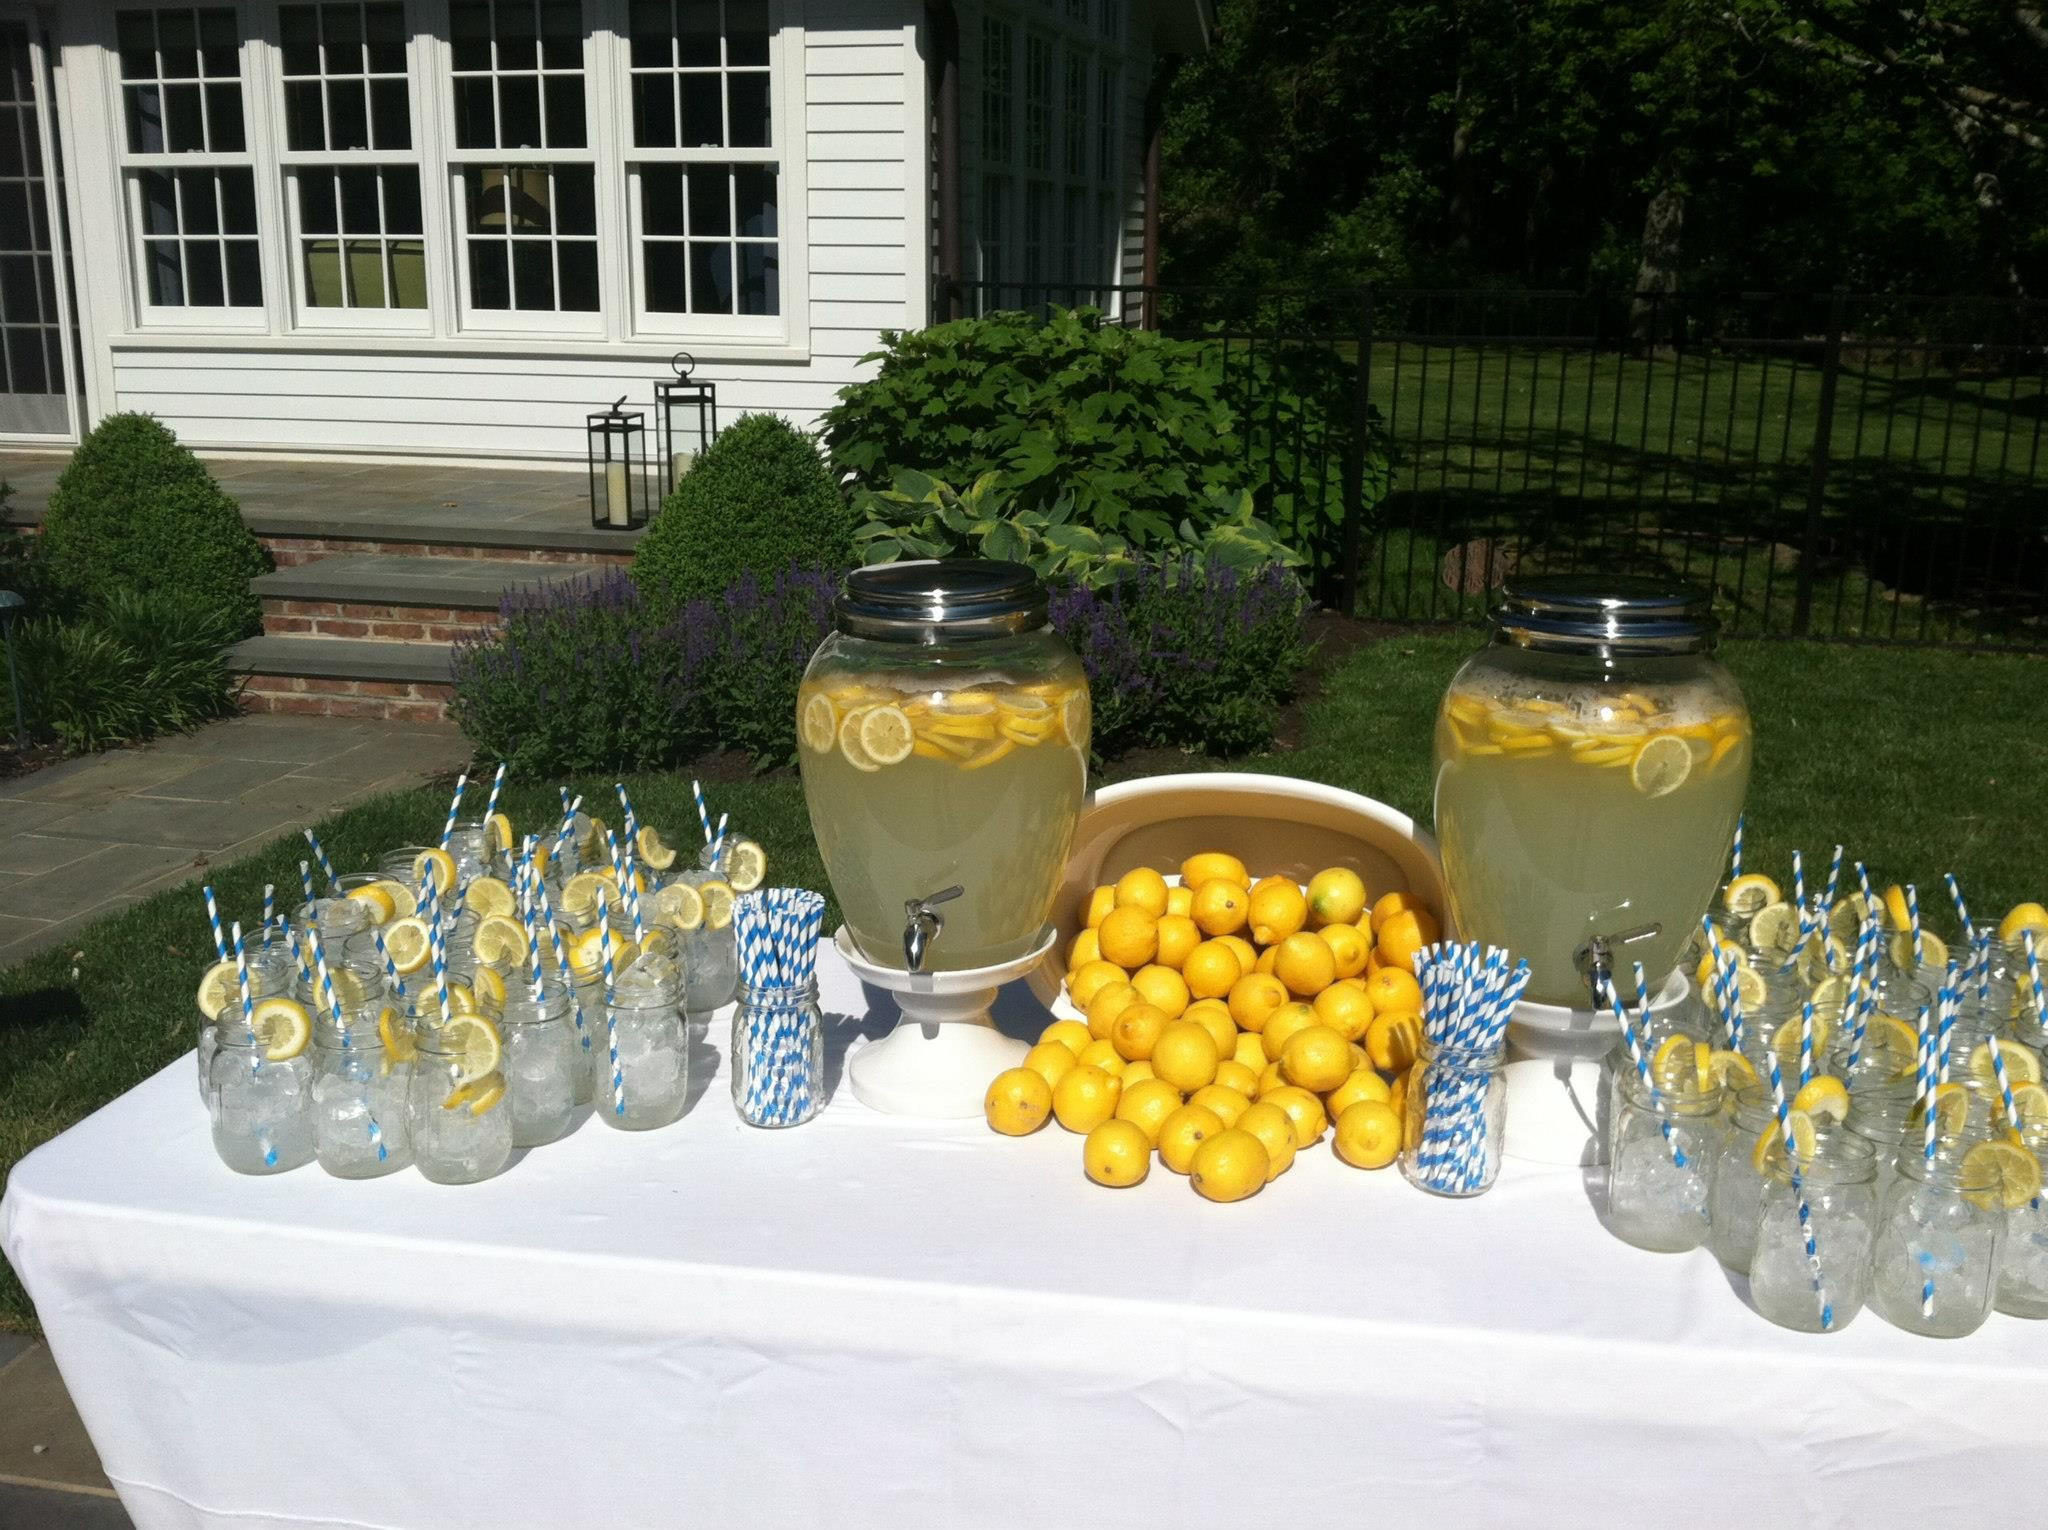 Food Ideas For High School Graduation Party
 Lemon aid stand